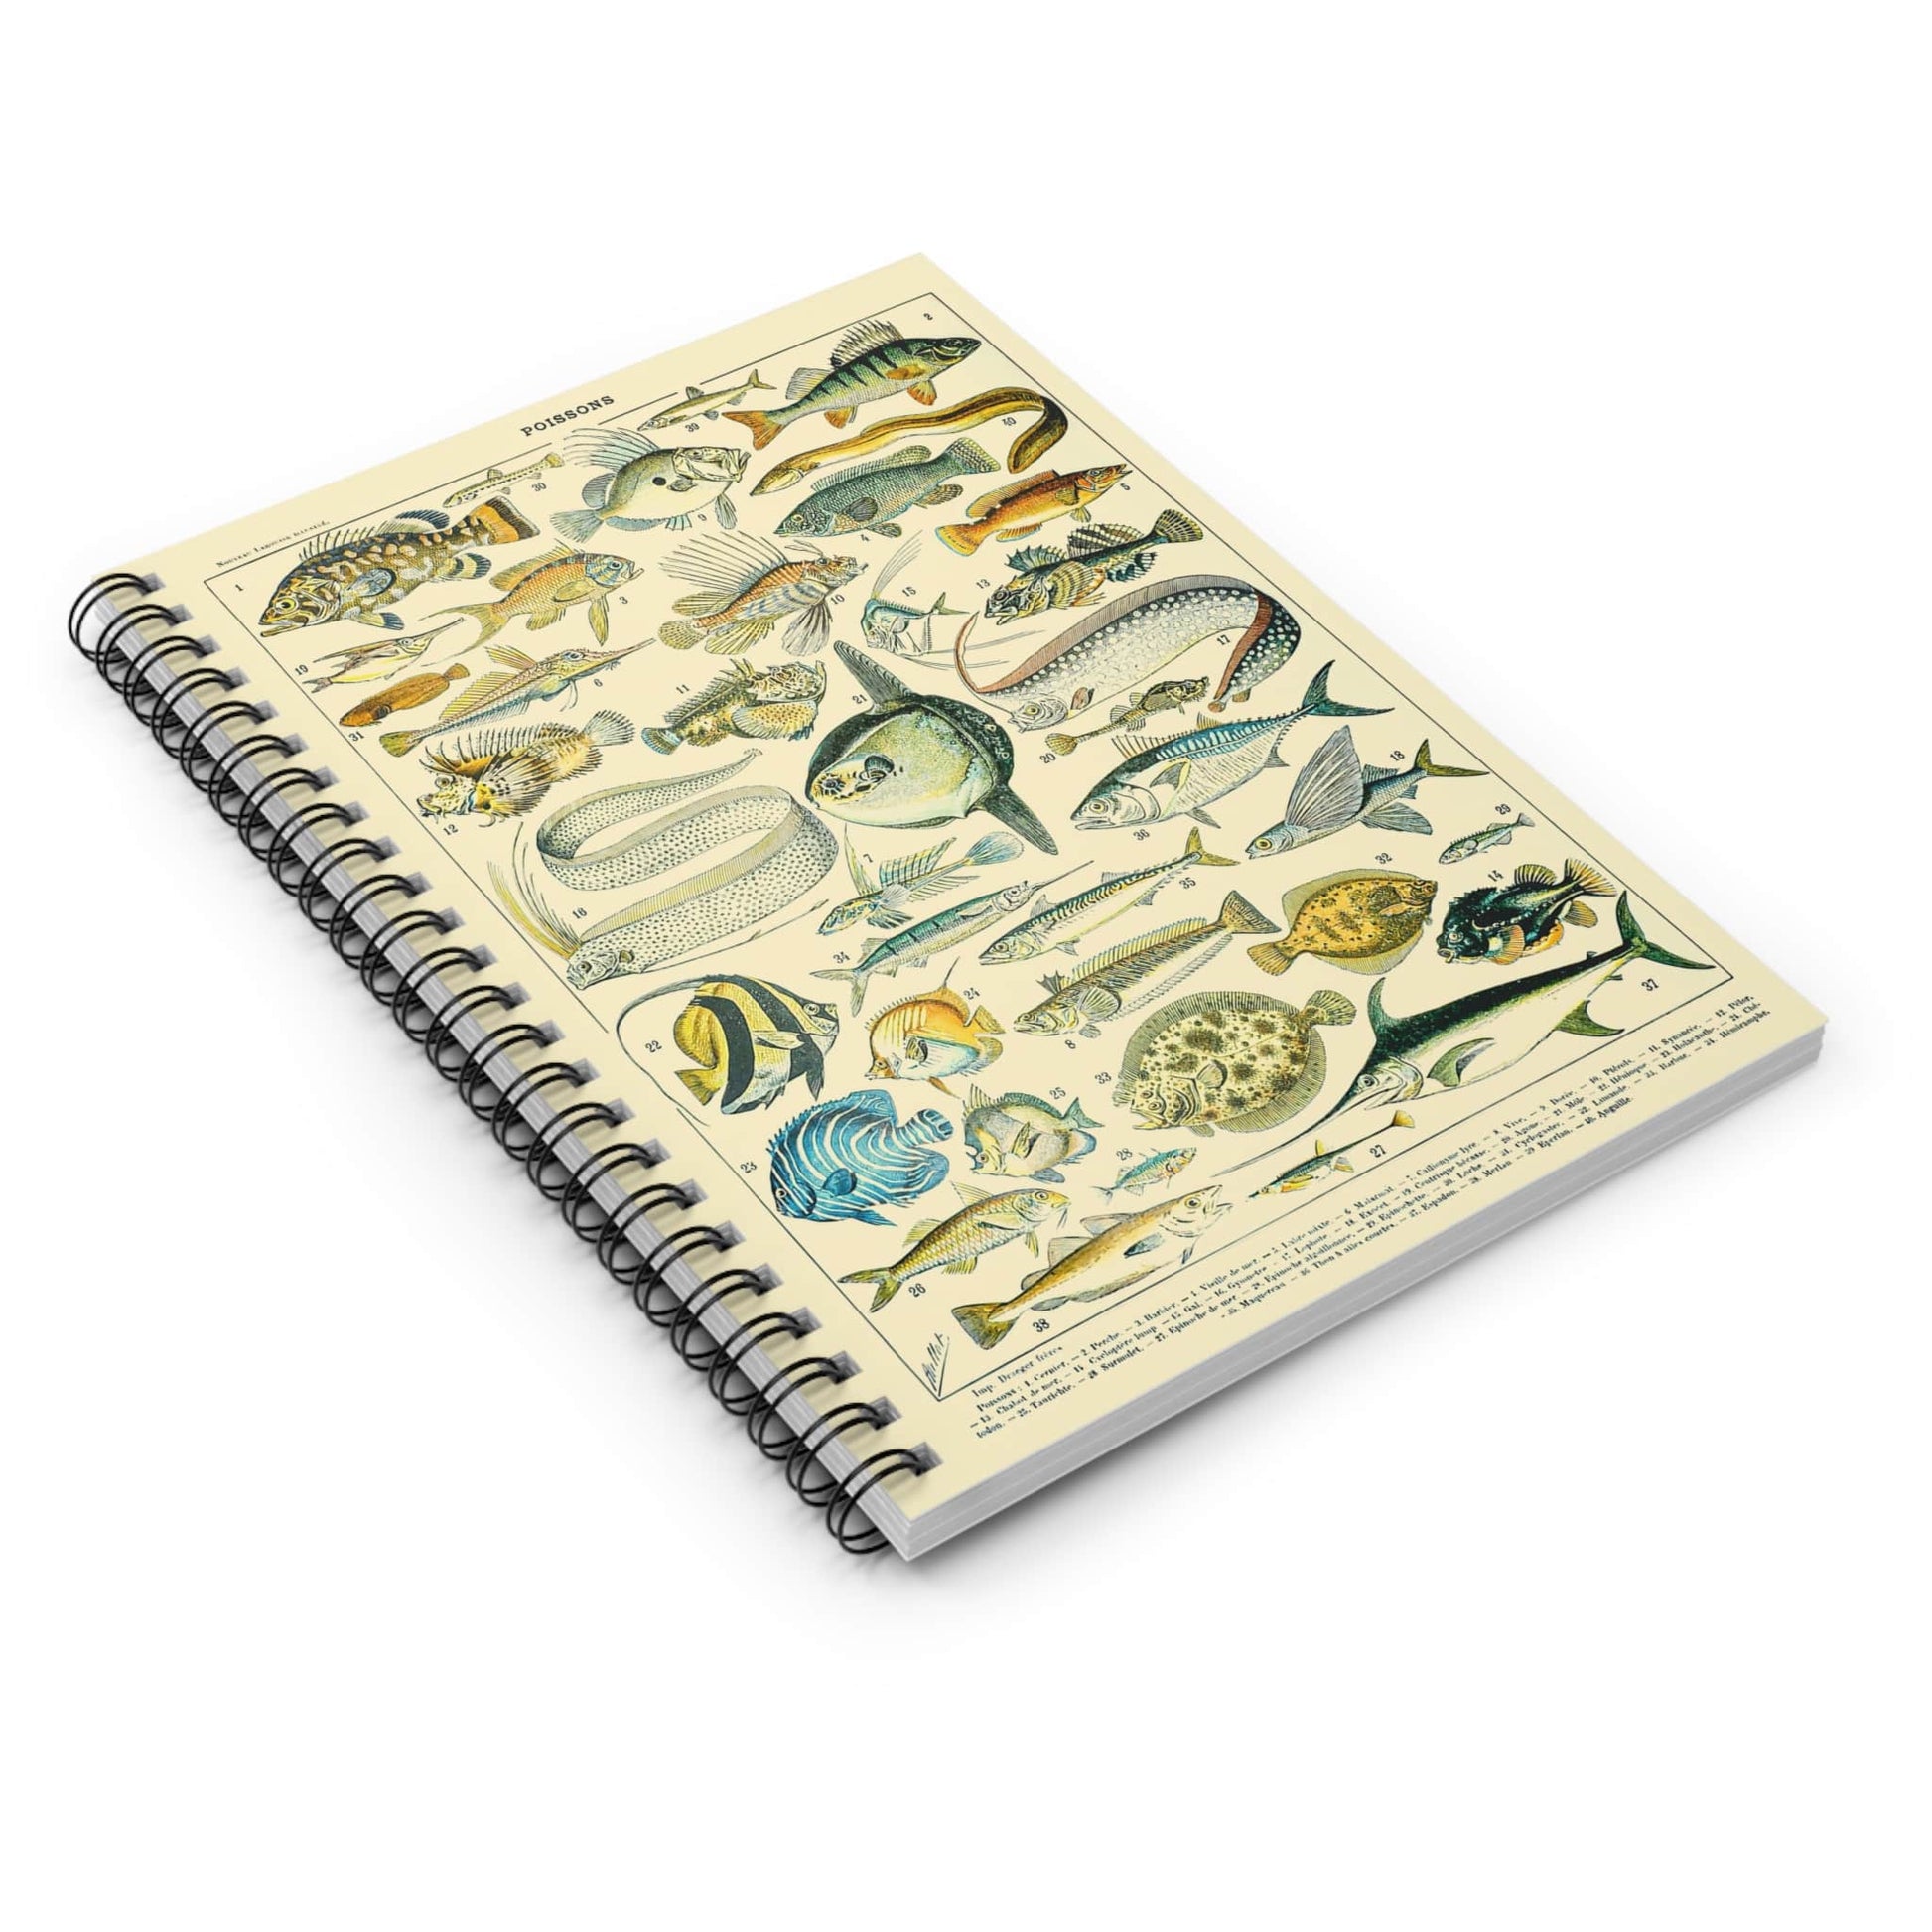 Fishing Spiral Notebook Laying Flat on White Surface